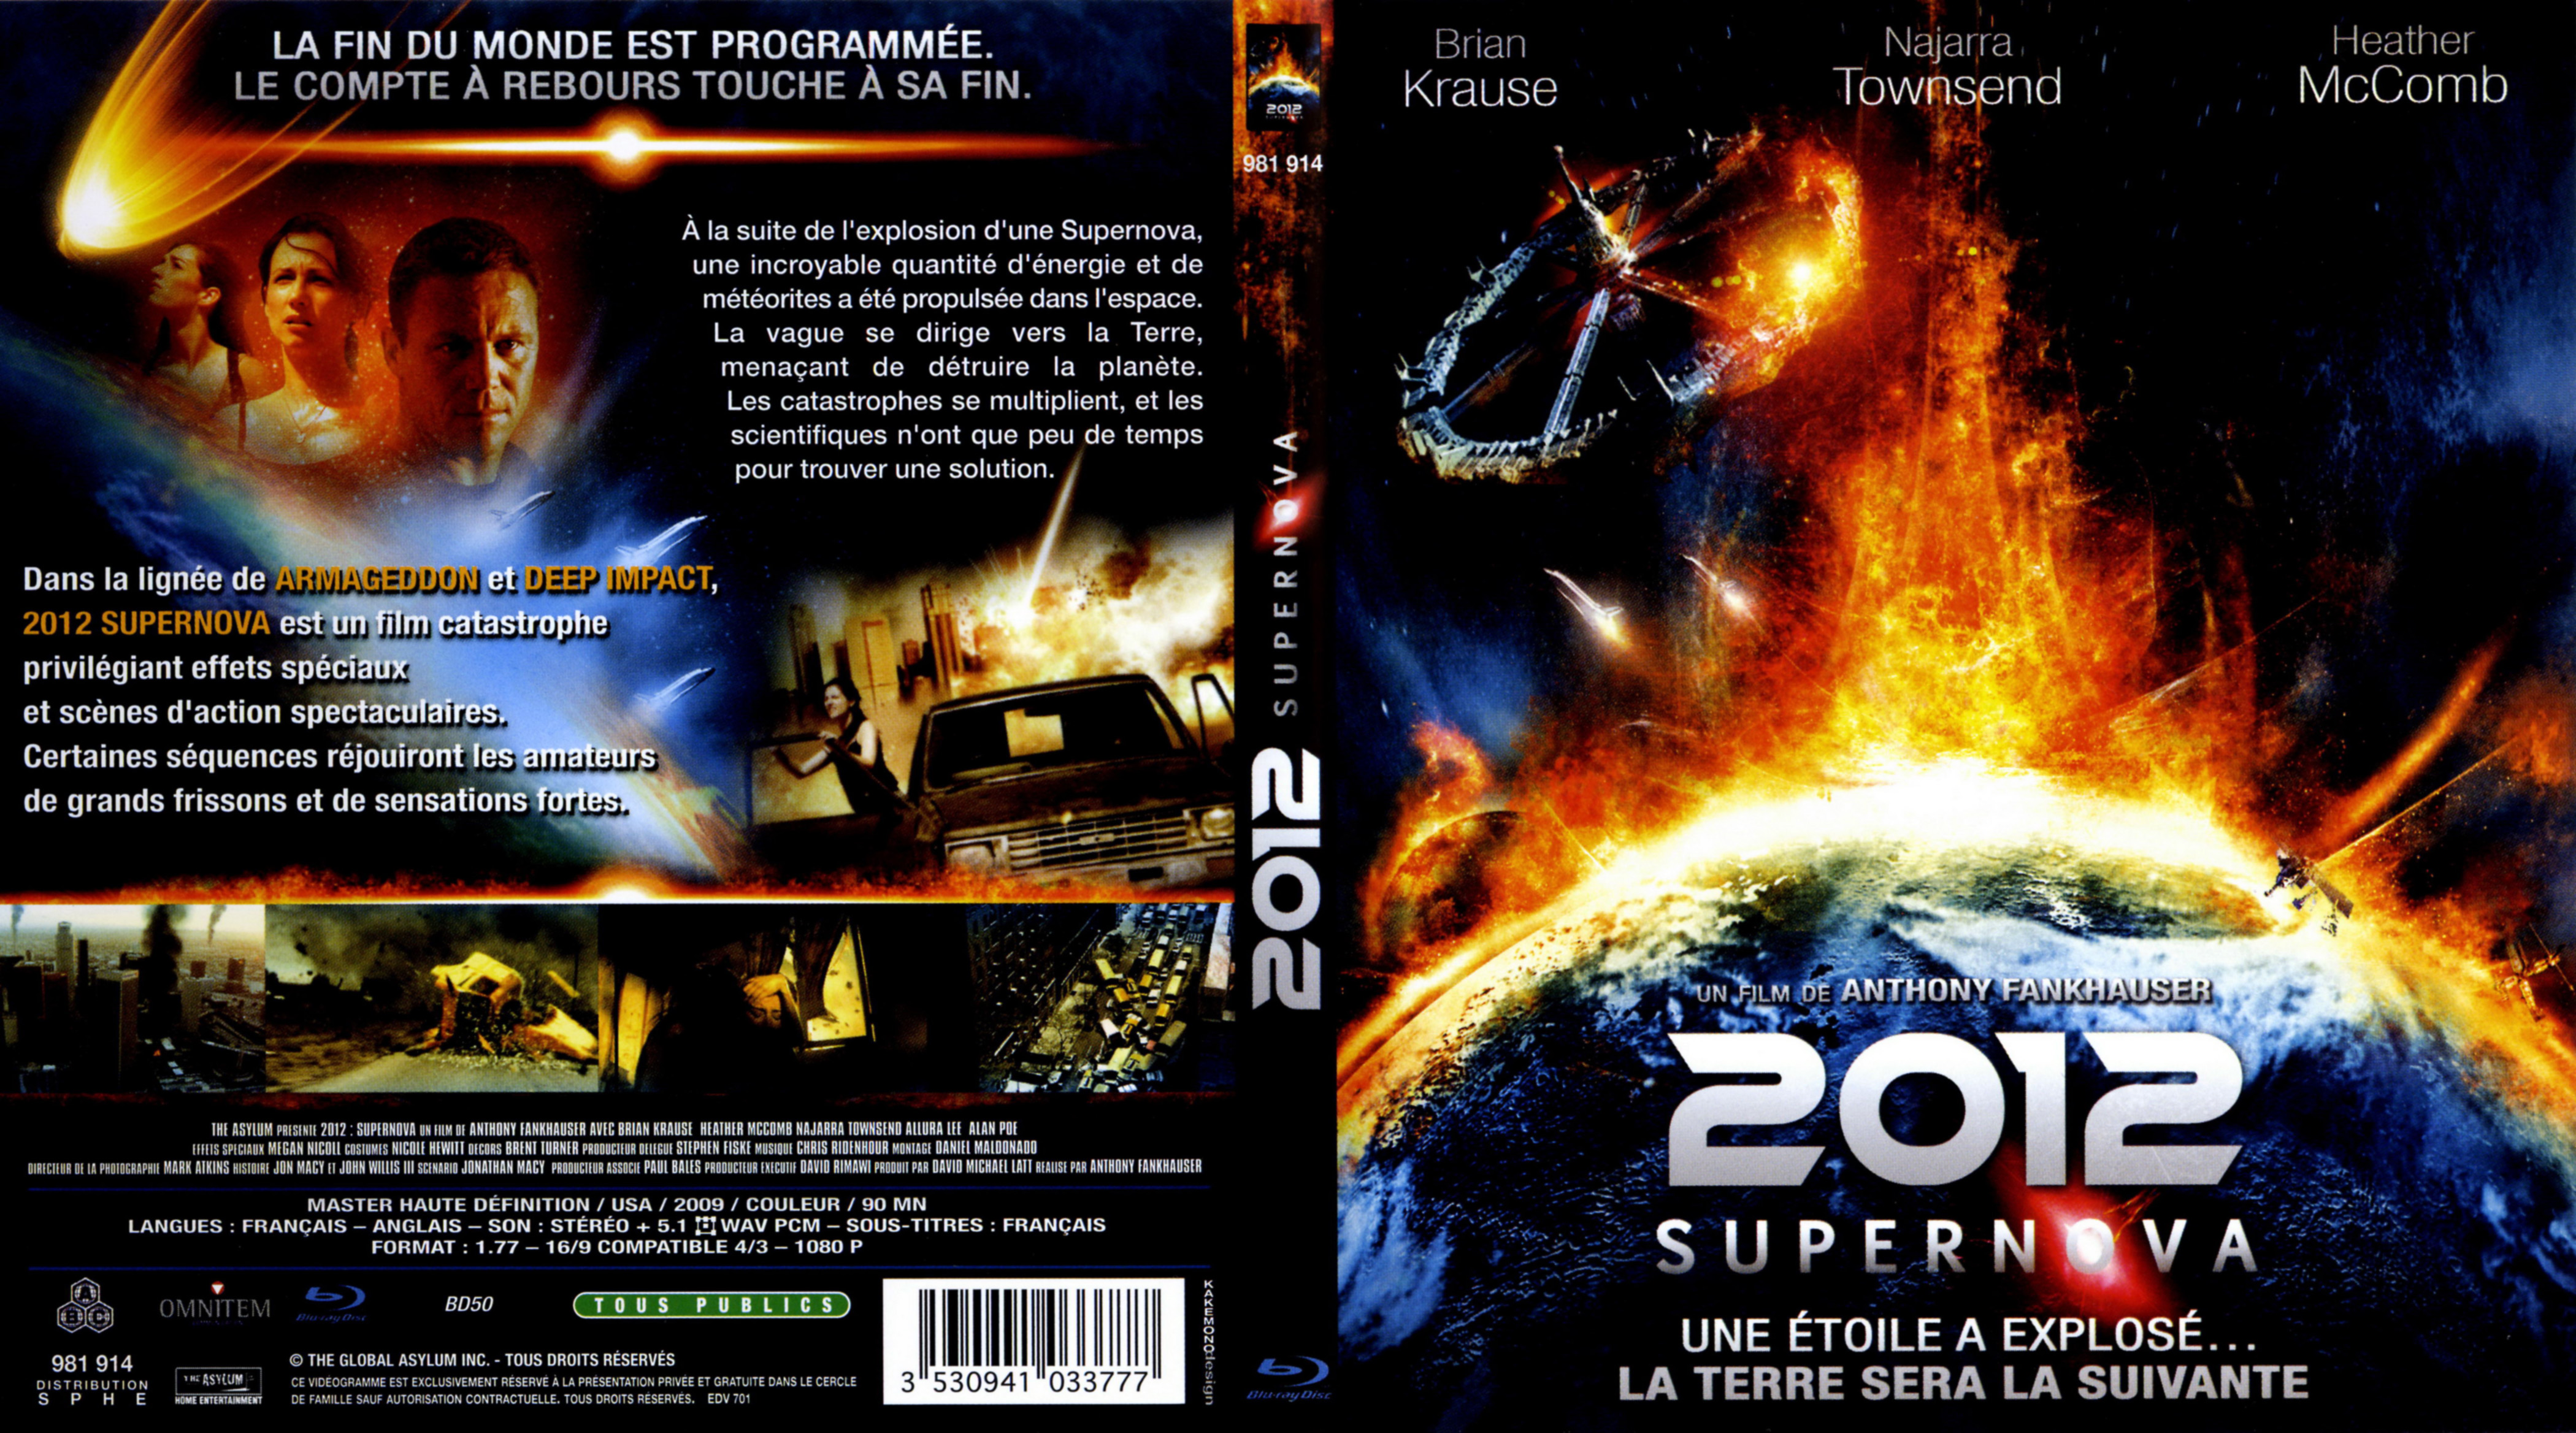 Jaquette DVD 2012 supernova (BLU-RAY)